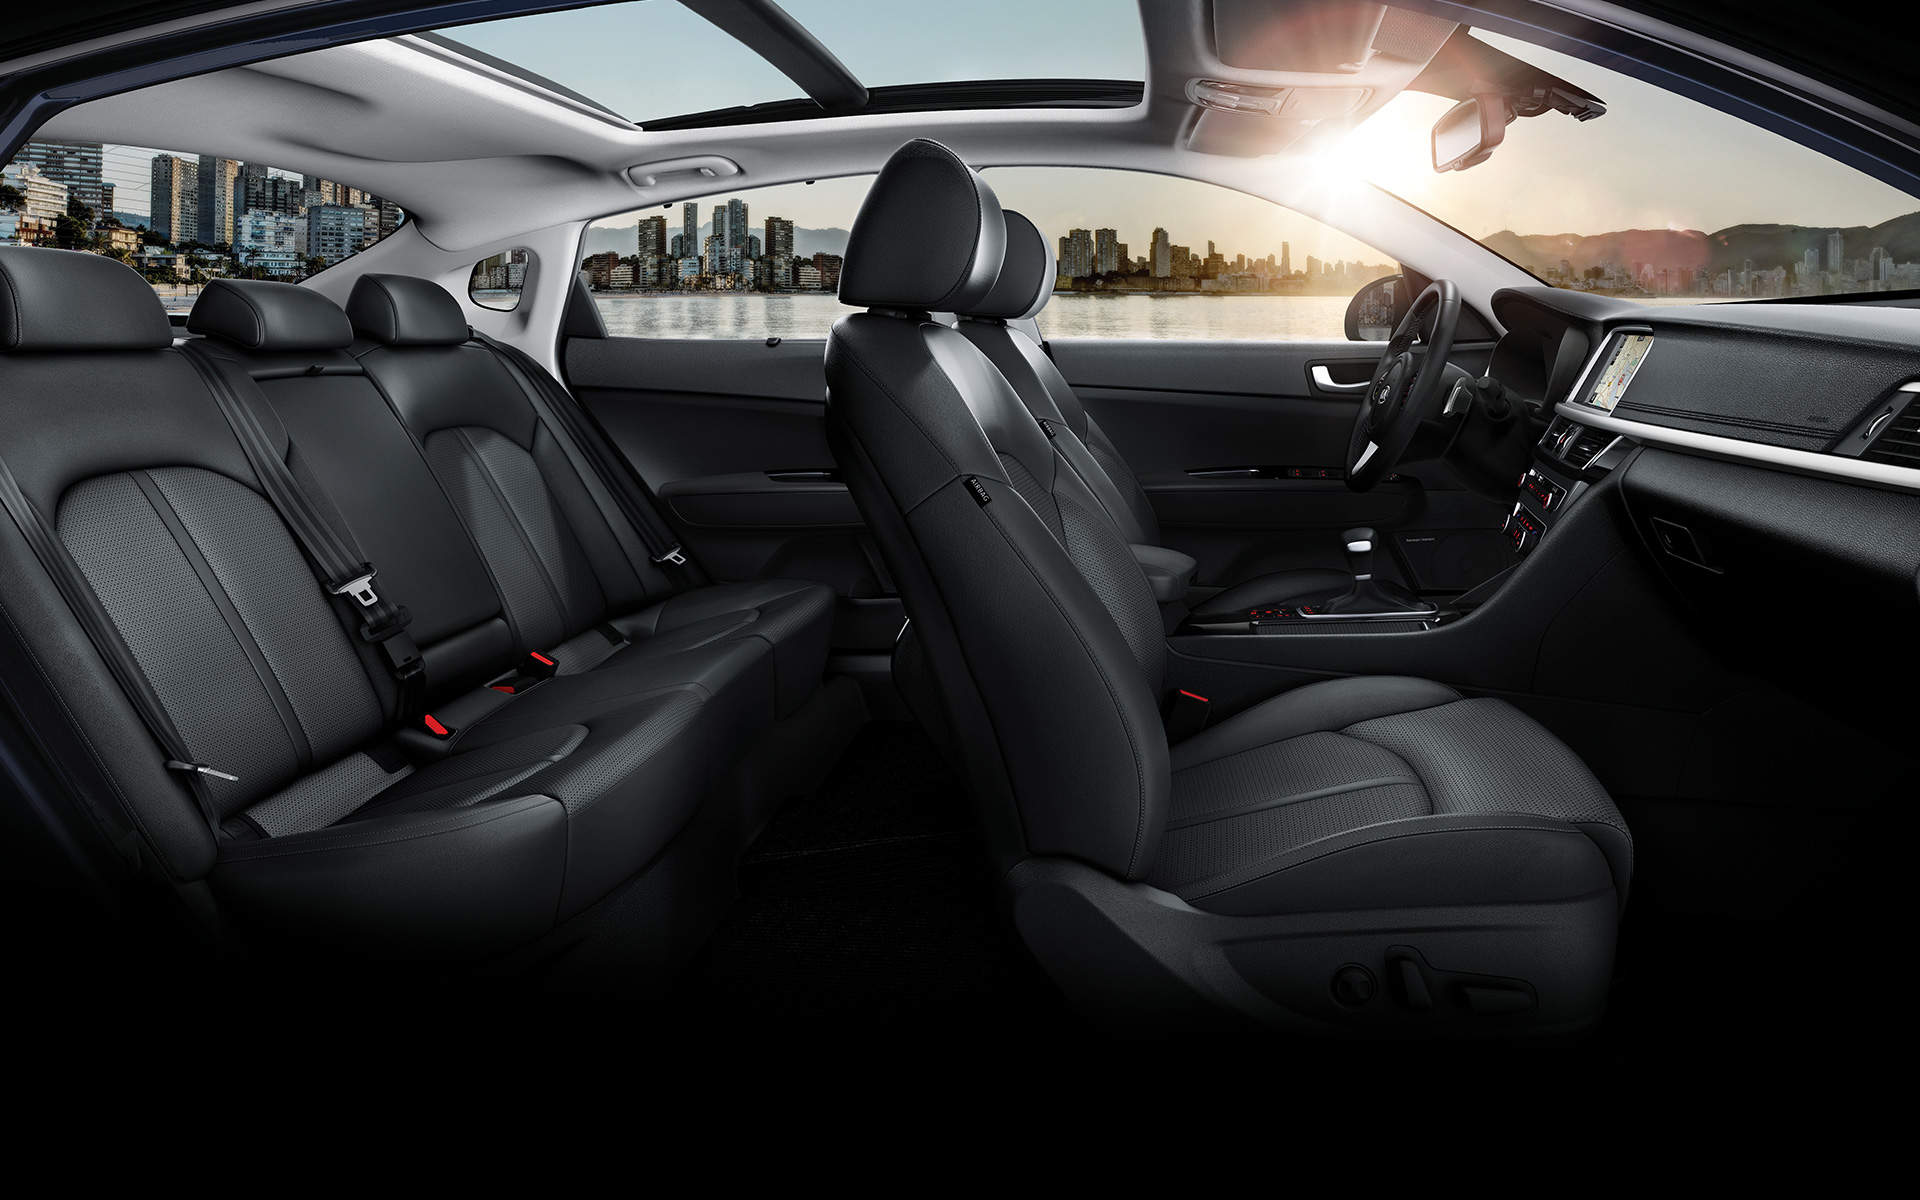 all-new Kia Optima refined interior high-quality leather